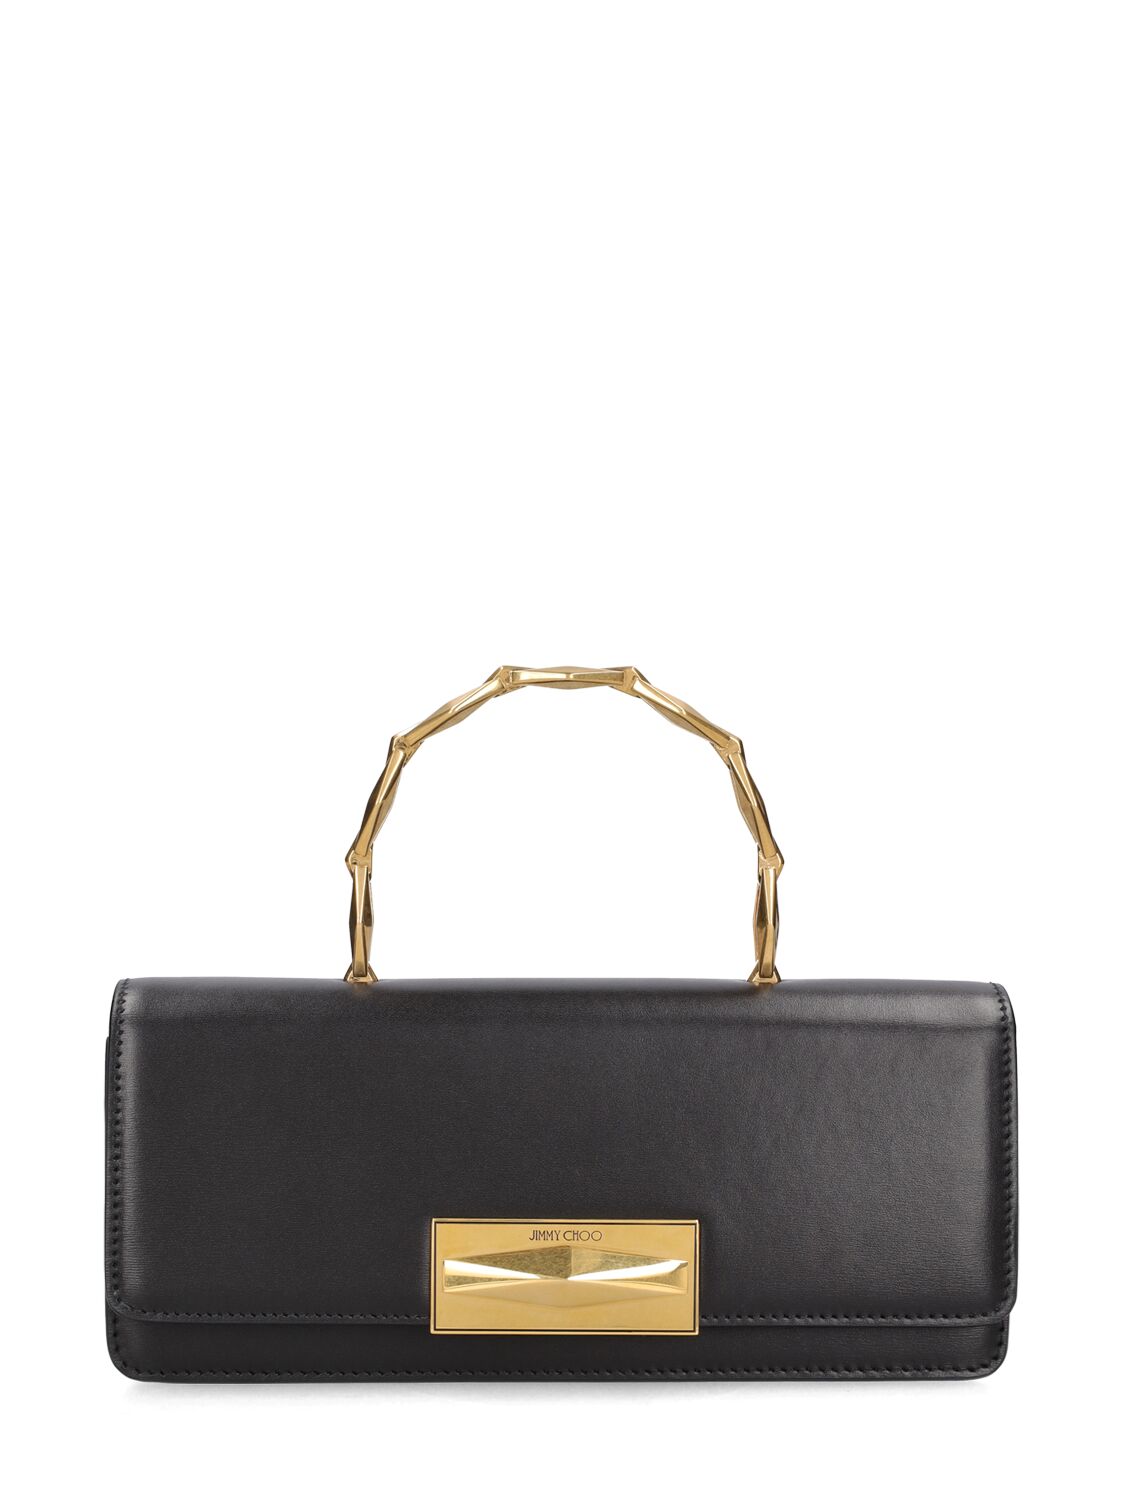 Jimmy Choo Diamond Leather Top-handle Bag In Black/gold